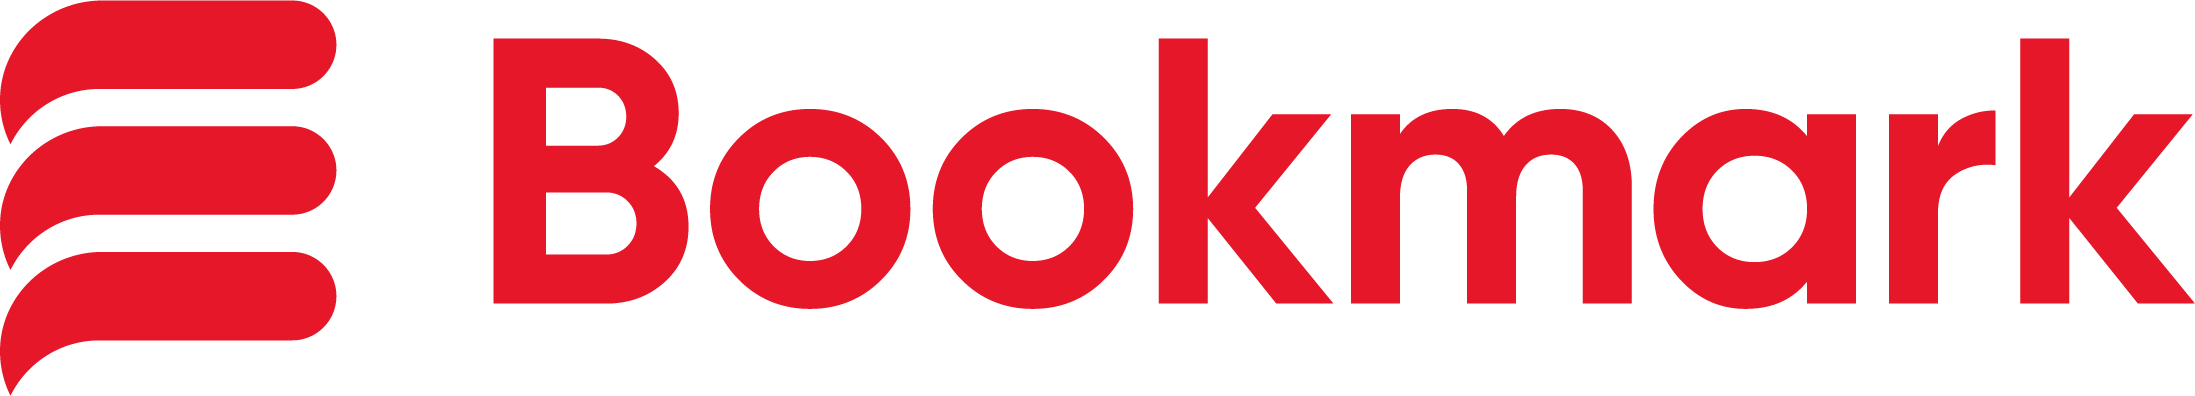 Bookmark Logo Red